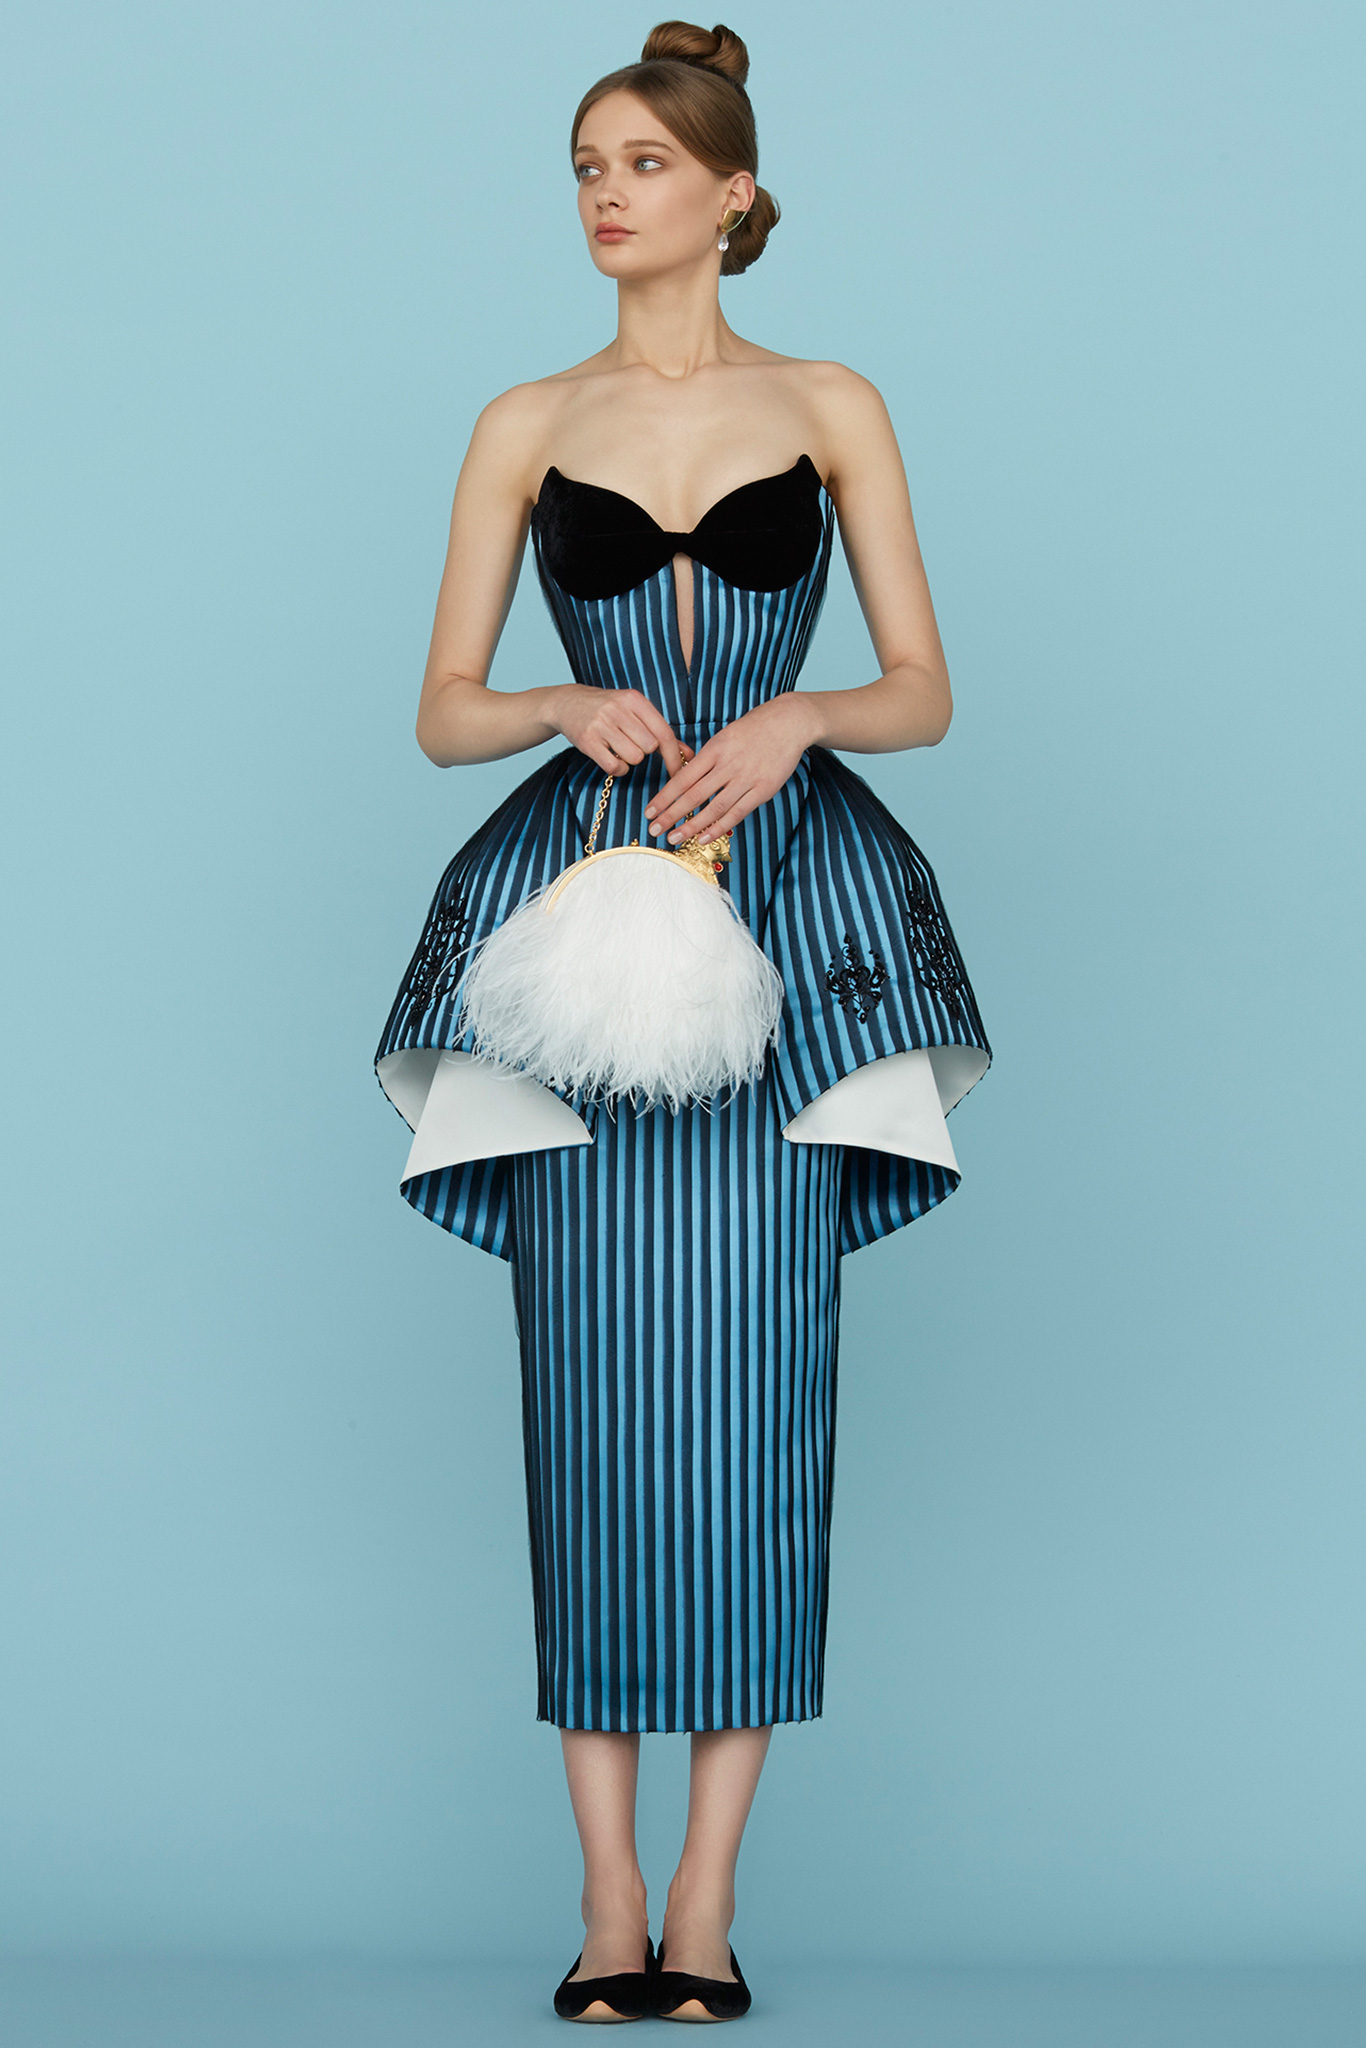 ulyana-sergeenko-spring-2015-haute-couture